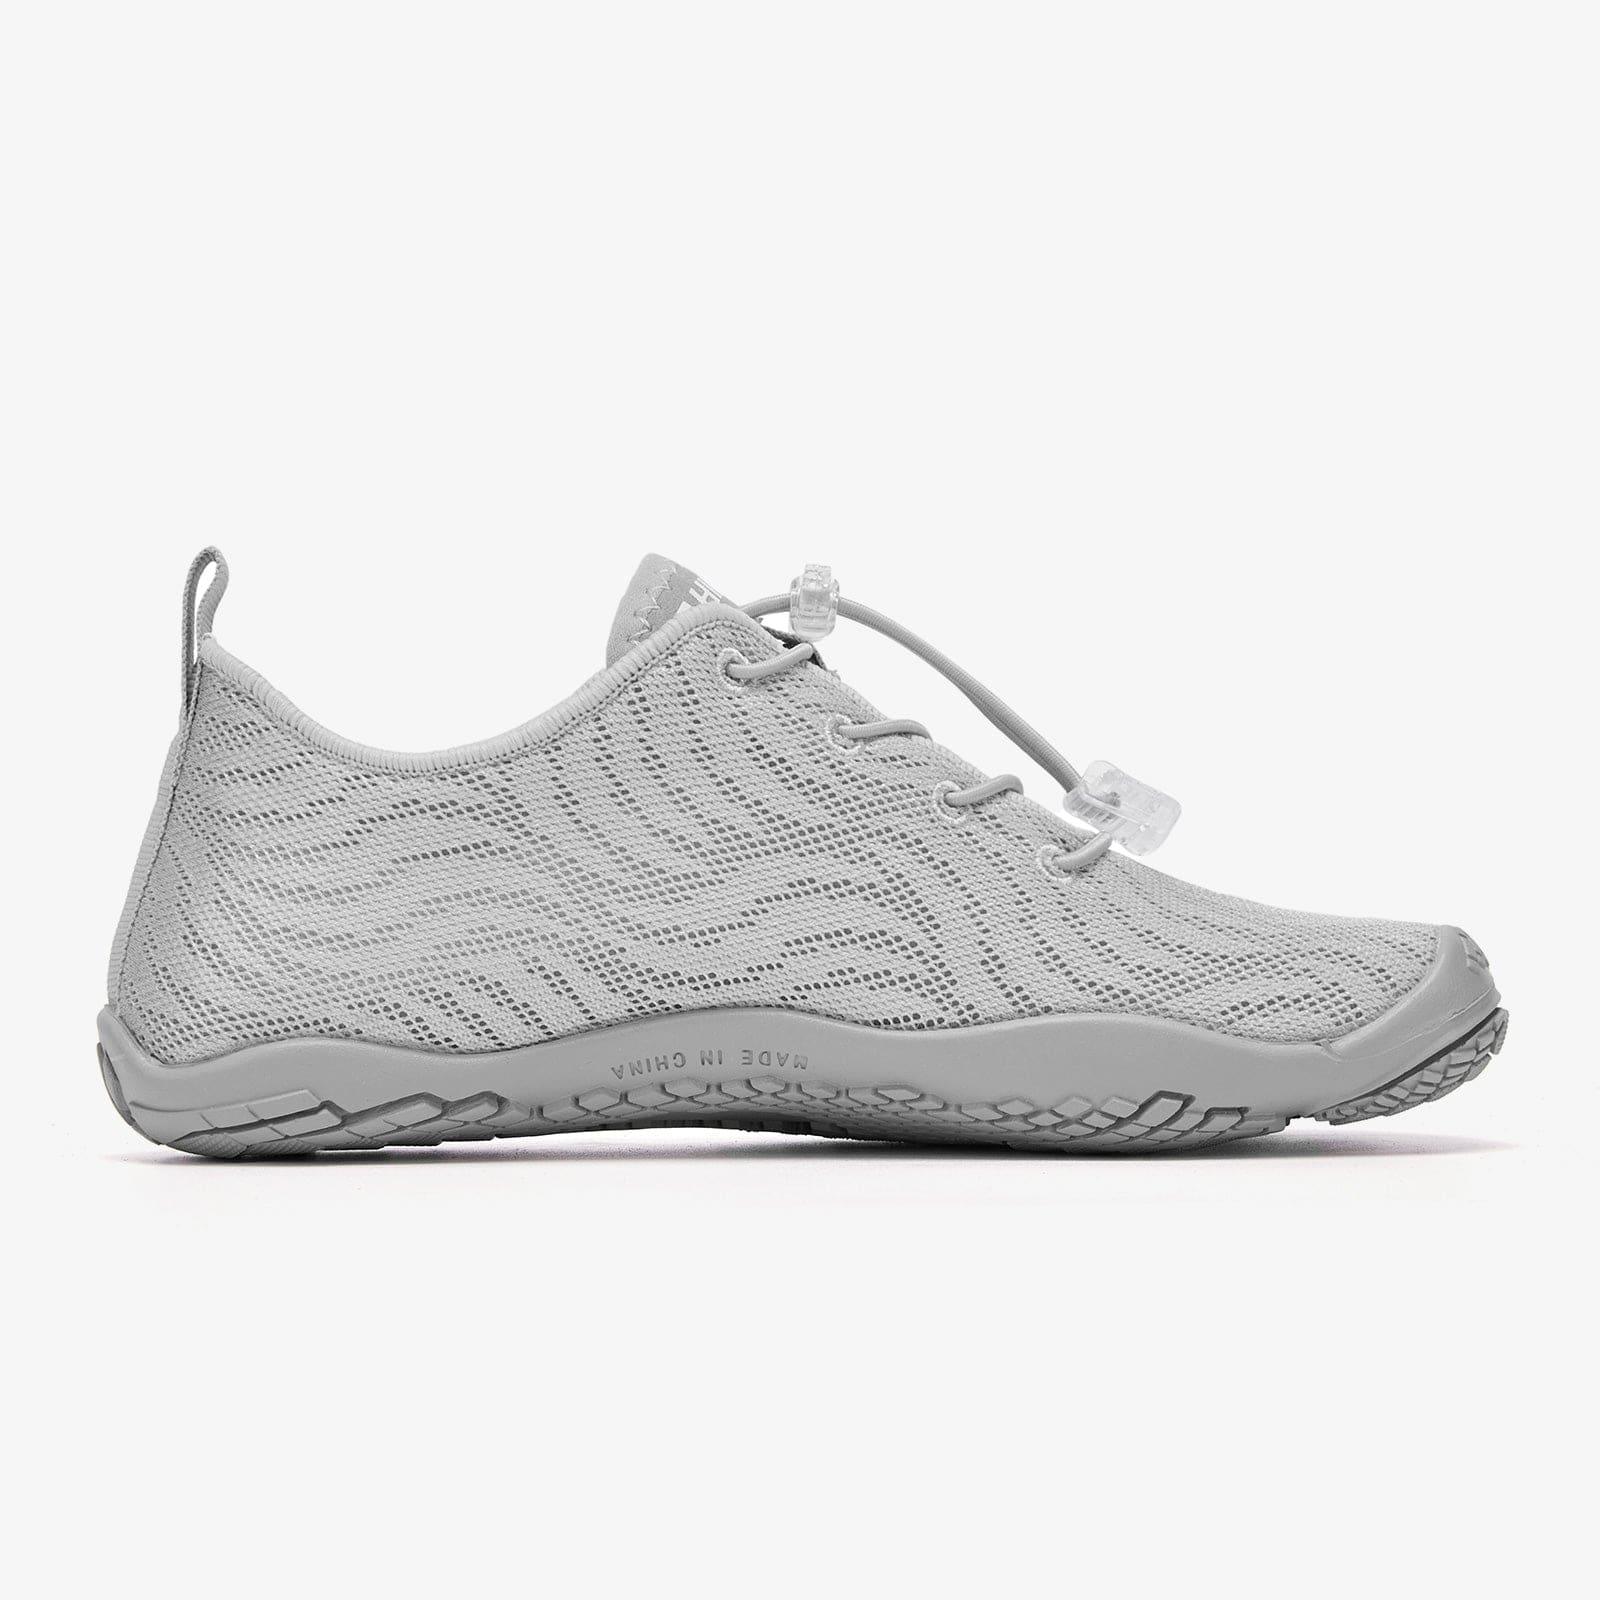 Hiitave 6 / Light Grey Aleader Women’s Aqua Sports Water Shoes - Light Grey